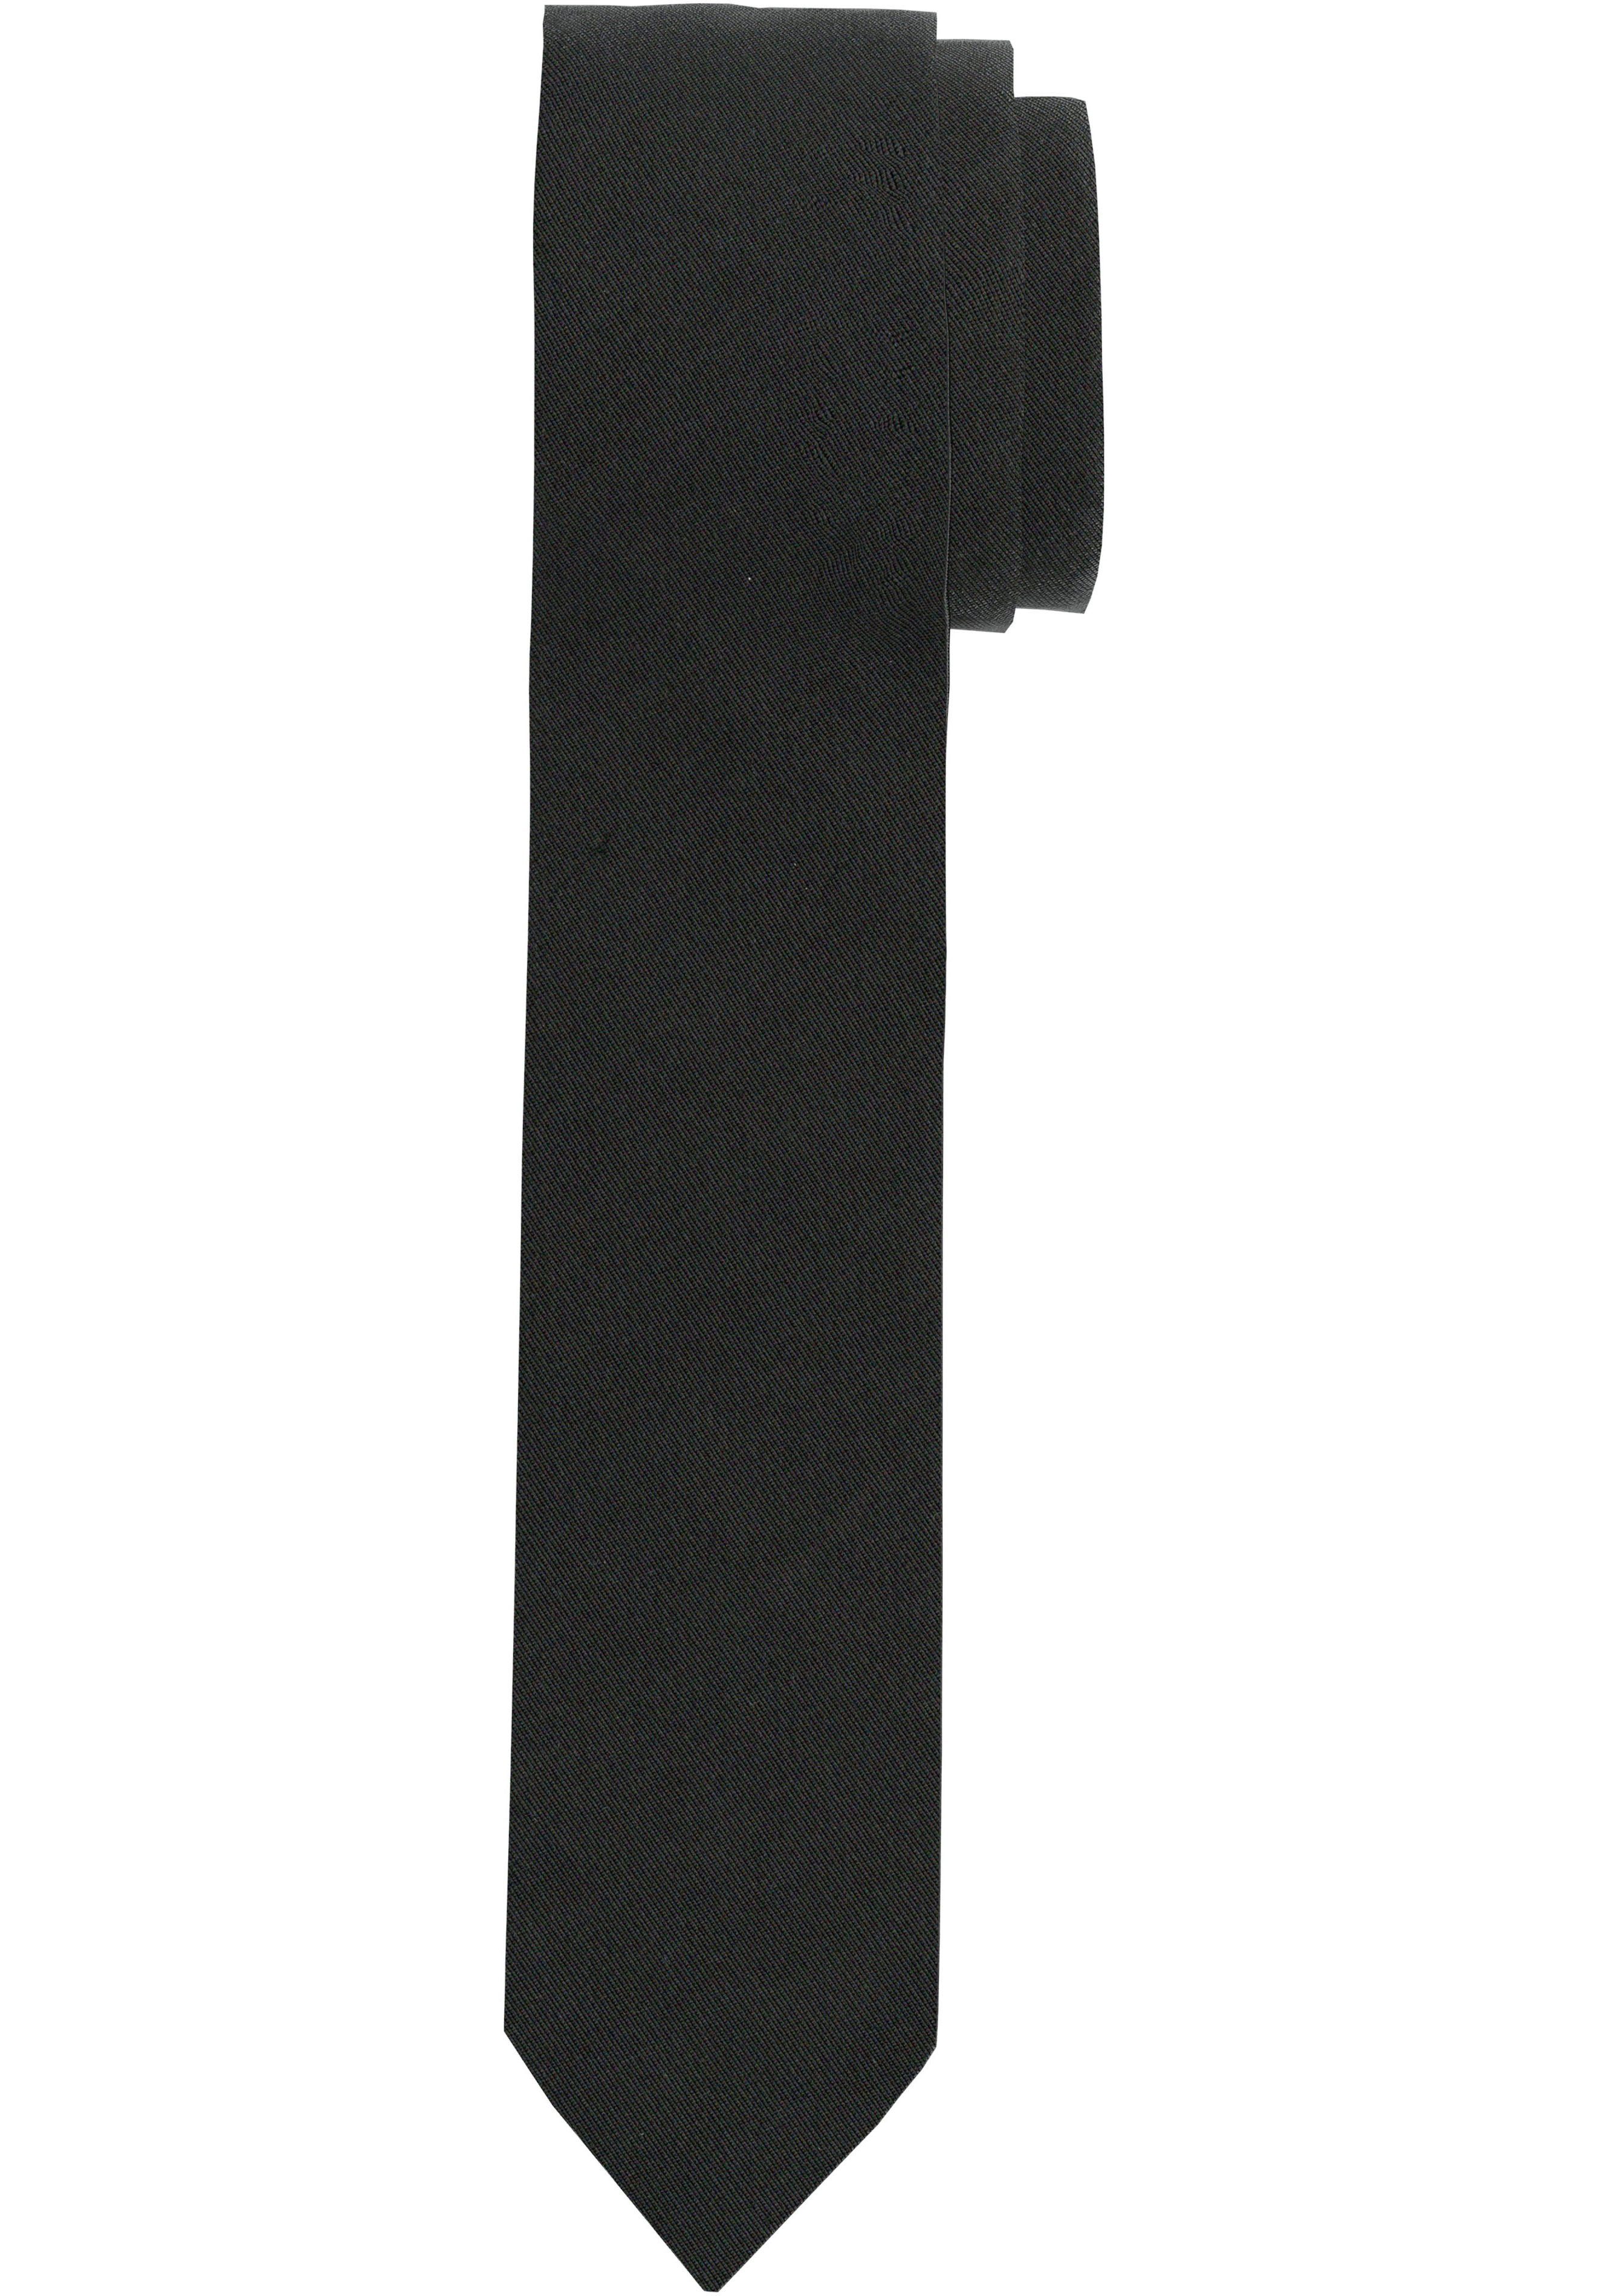 Krawatte OLYMP schwarz Krawatte Slim